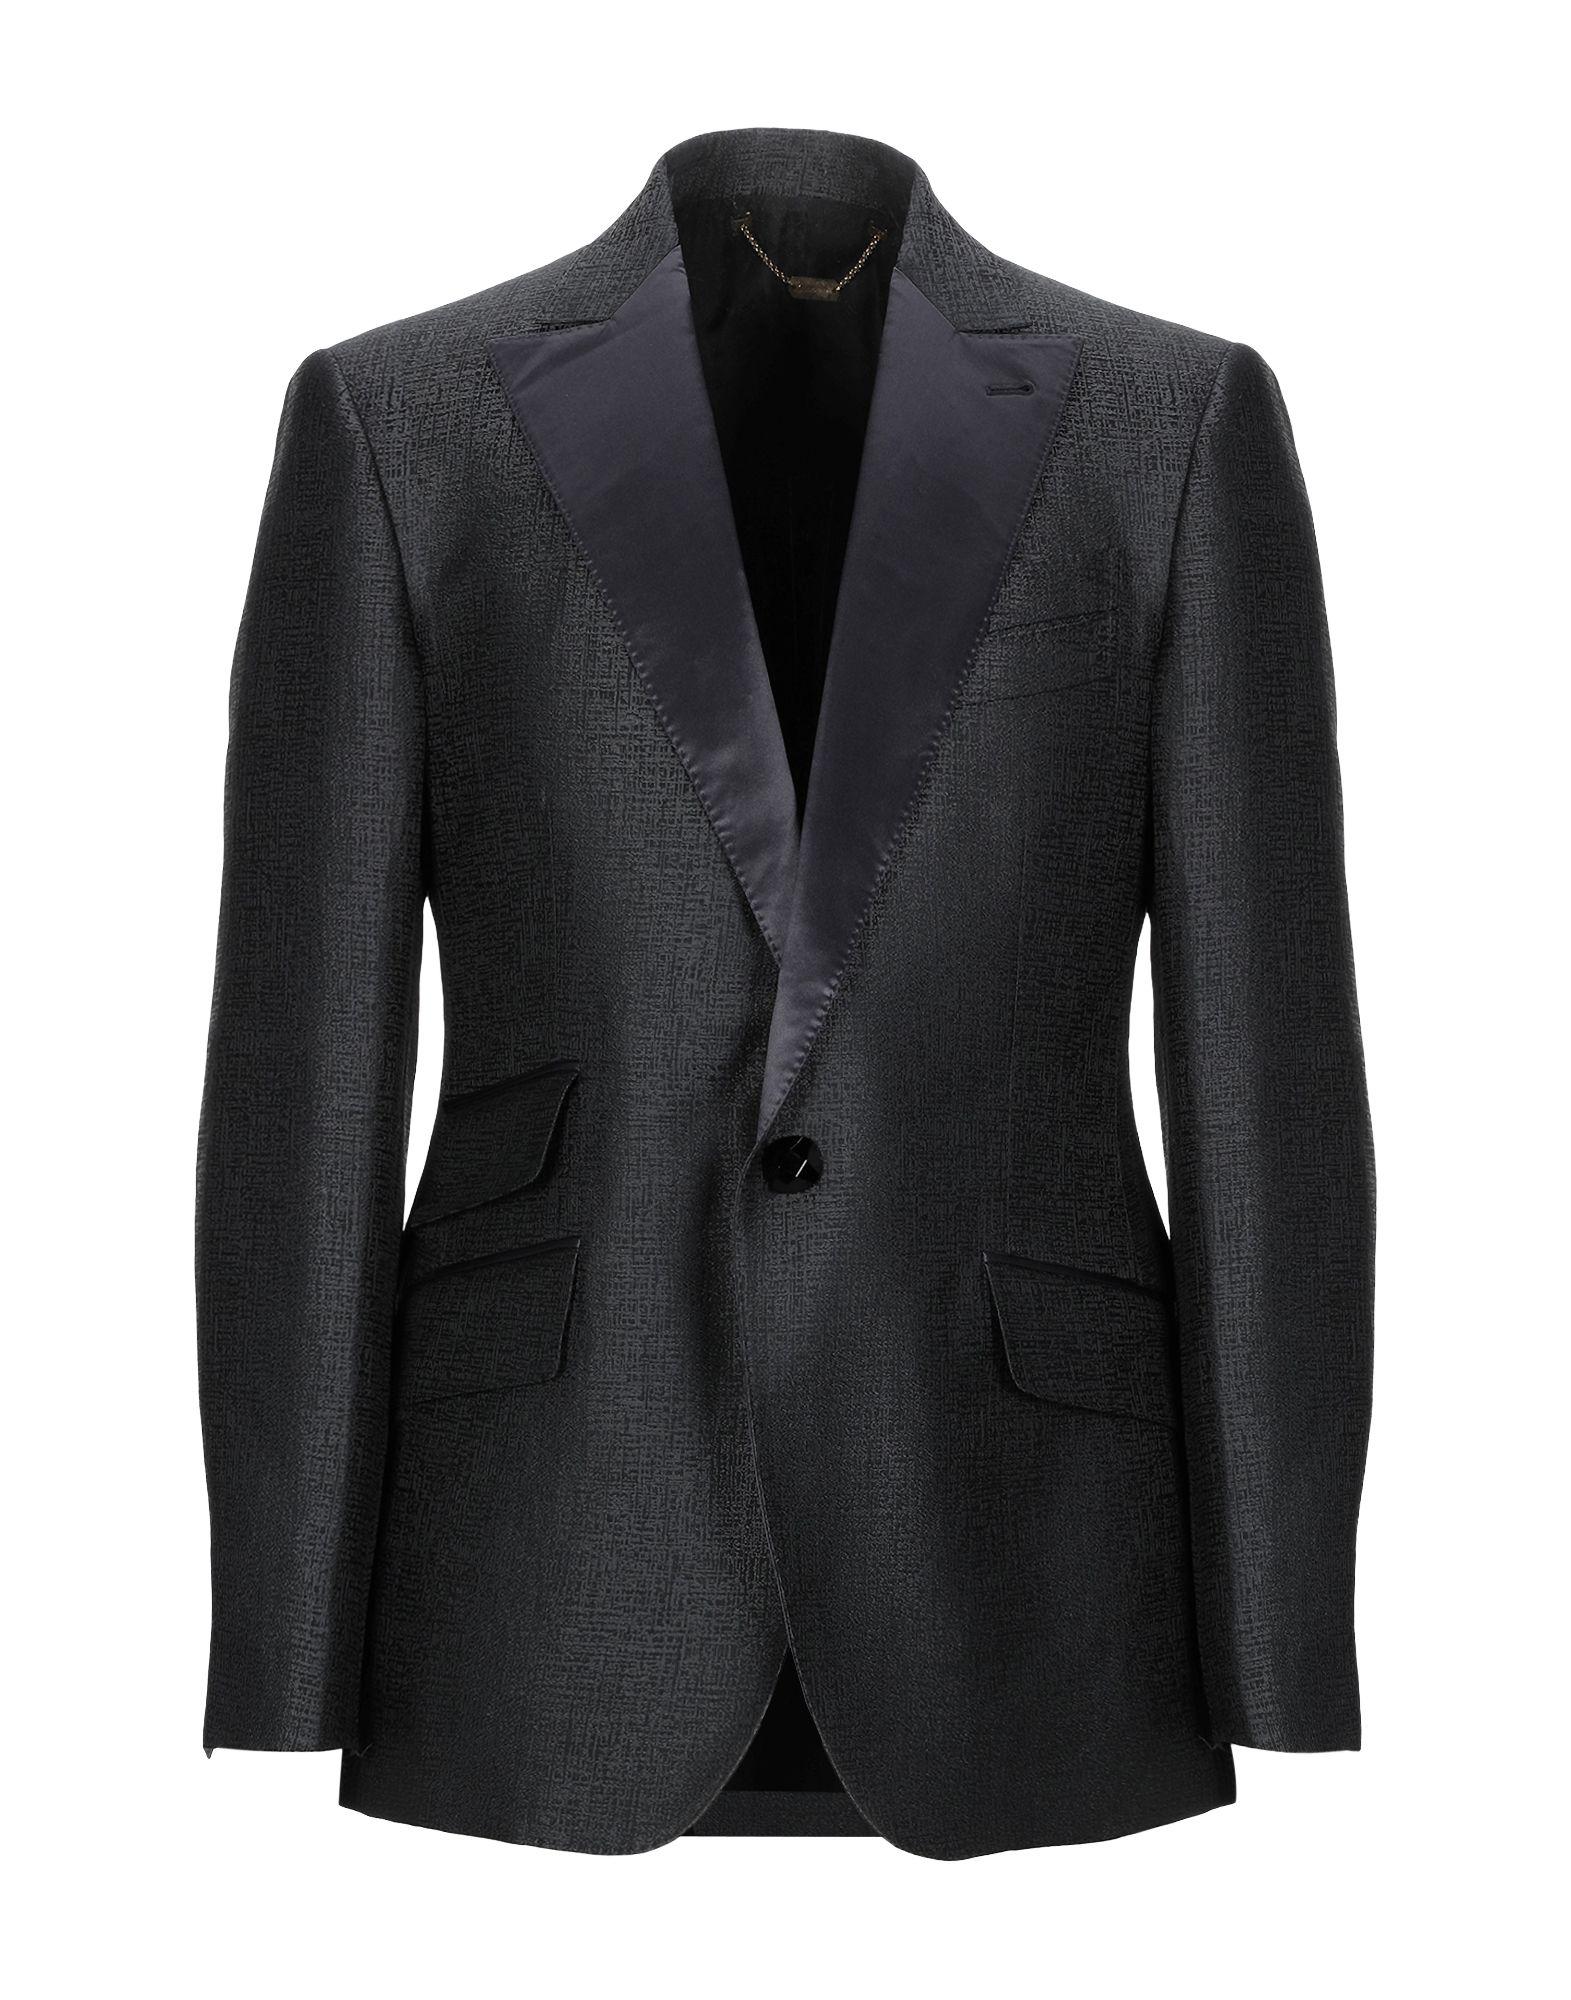 Billionaire Satin Suit Jacket in Black for Men - Lyst